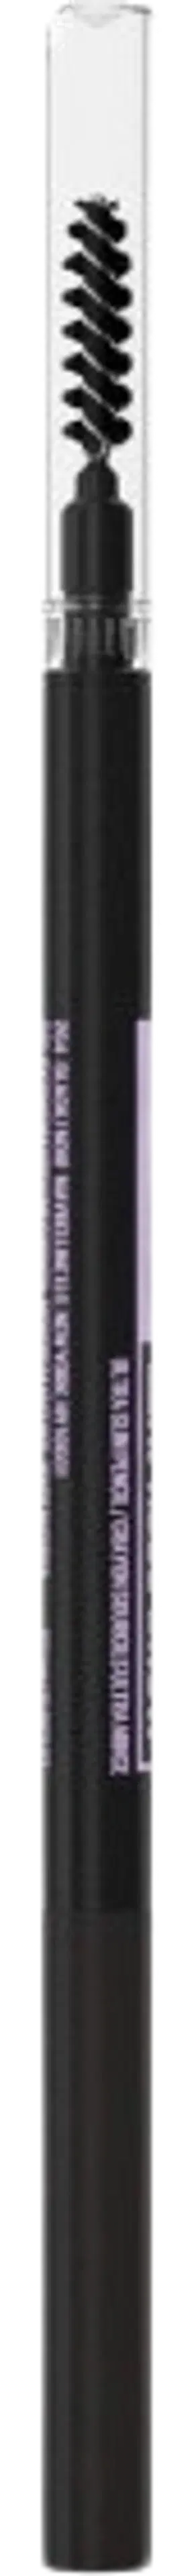 Maybelline New York Express Brow Ultra Slim 07 Black -kulmakynä 0,84g